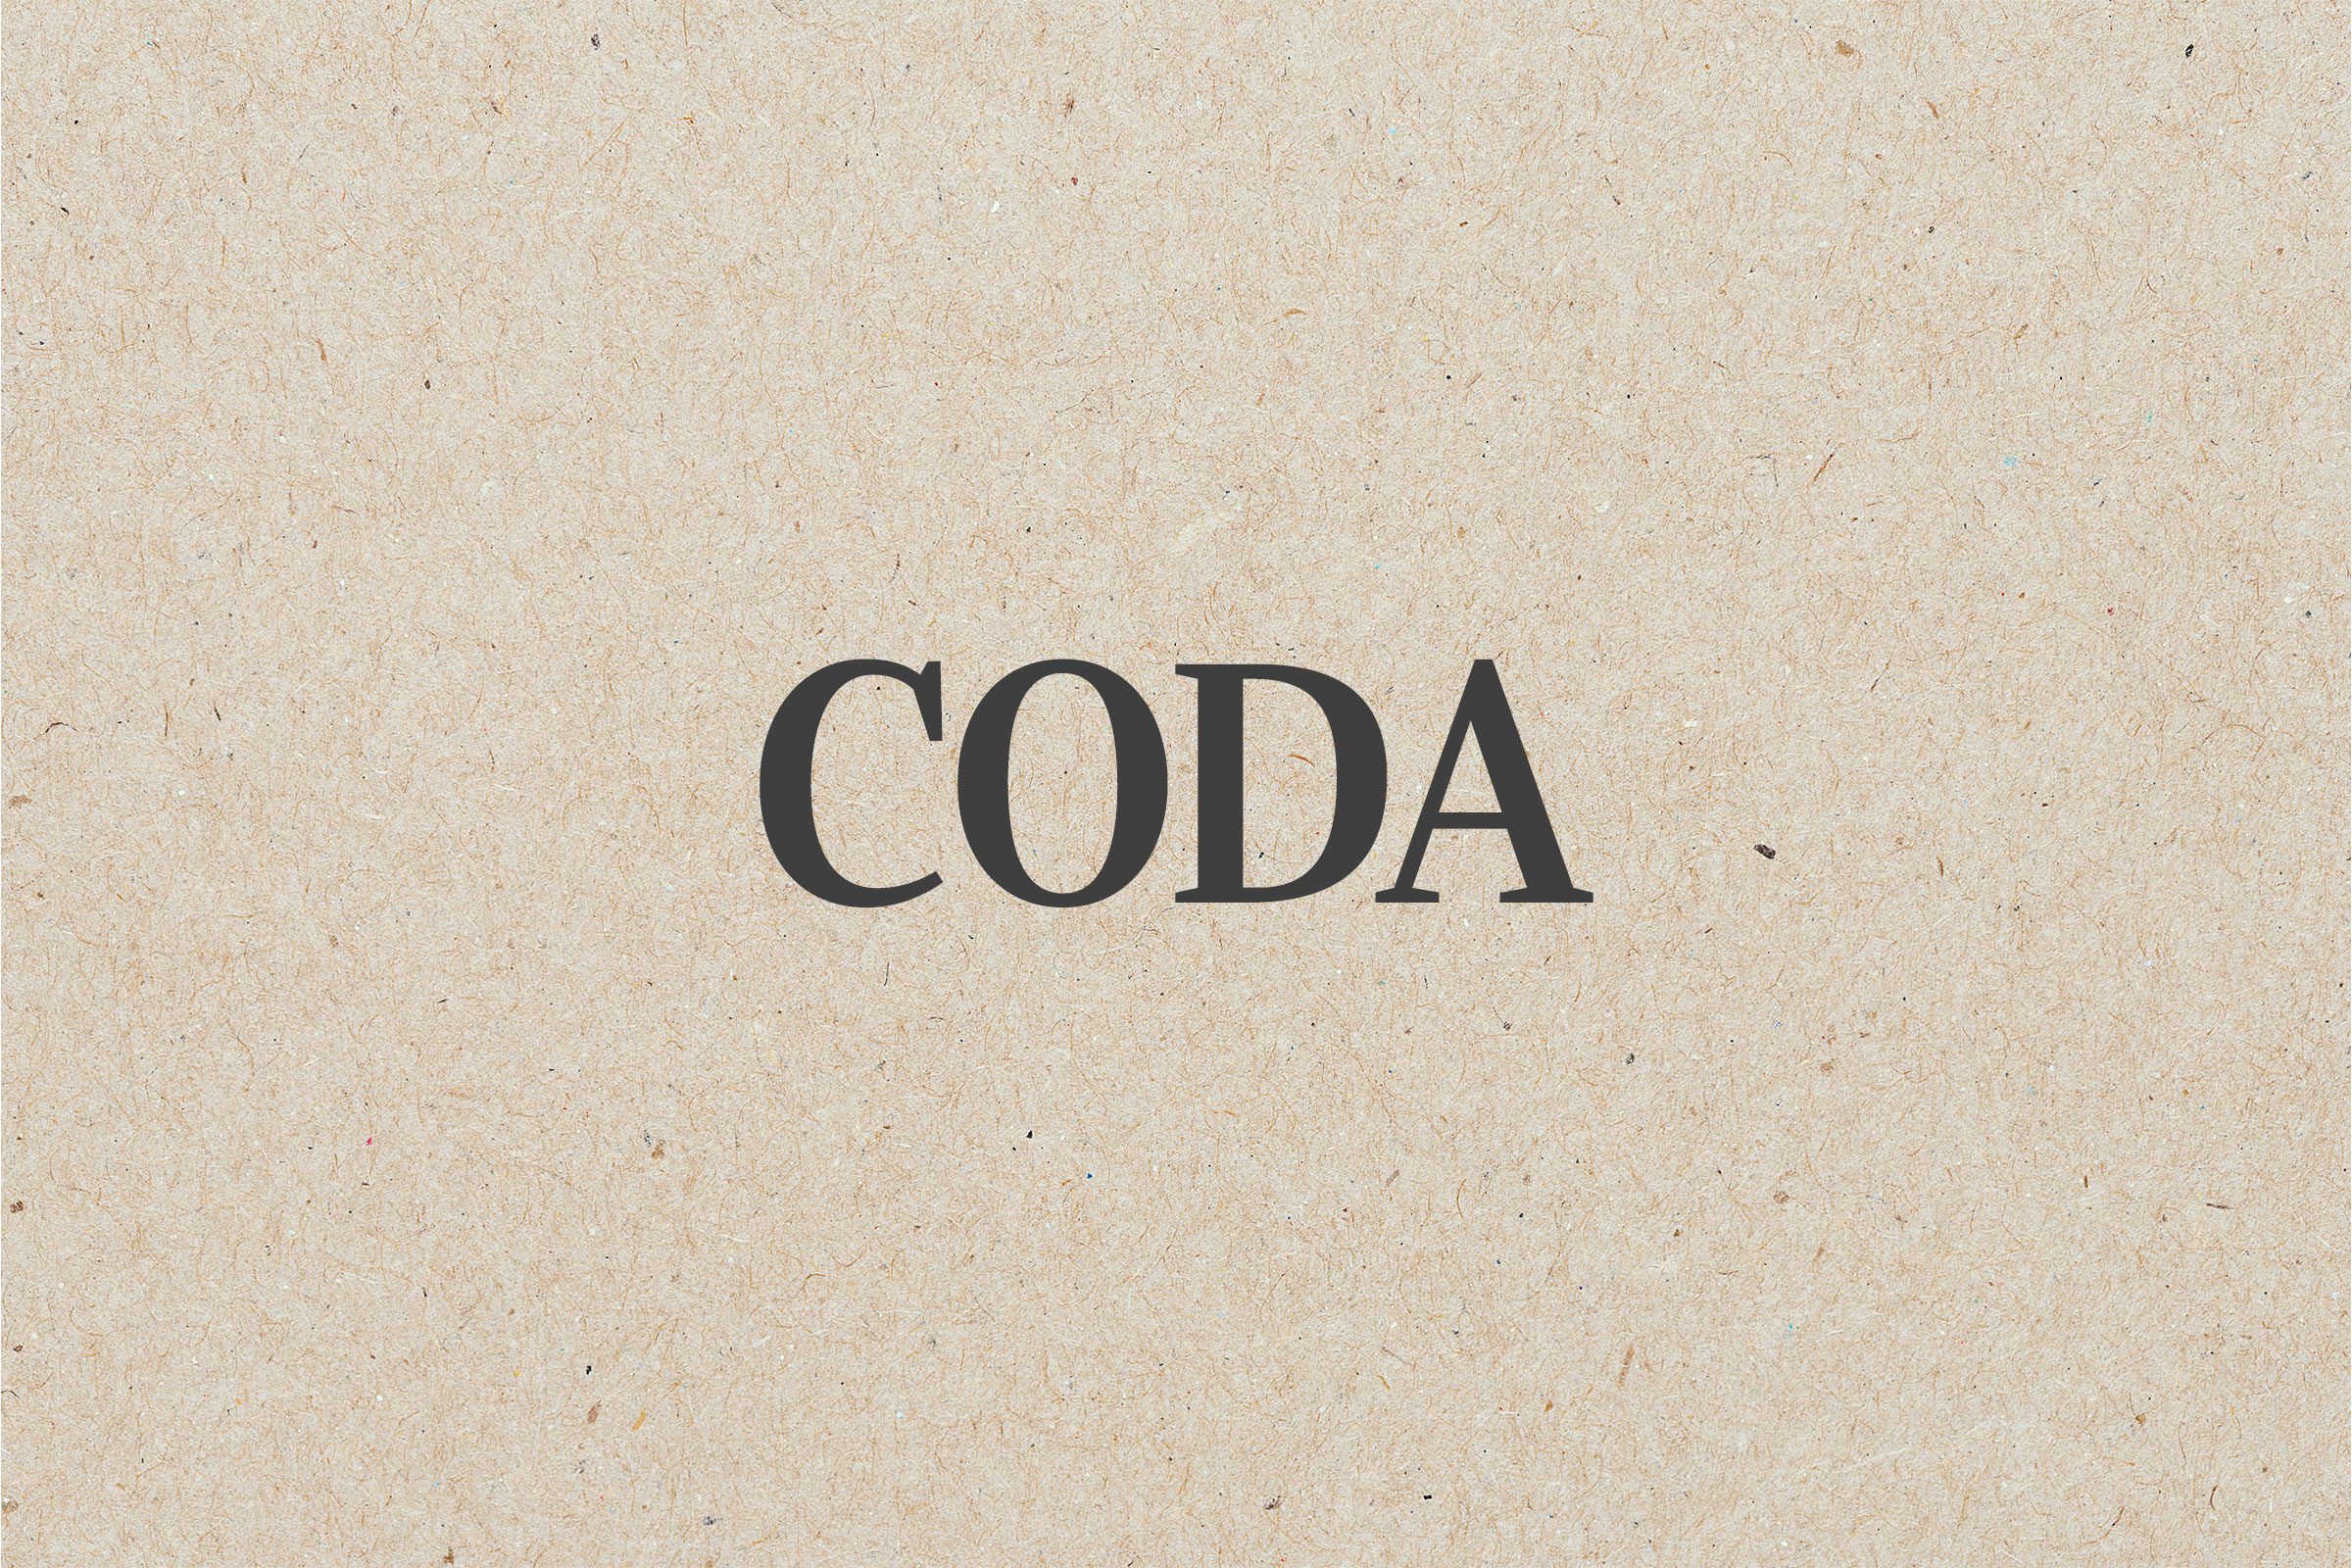 CODA Against Kraft Paper Background